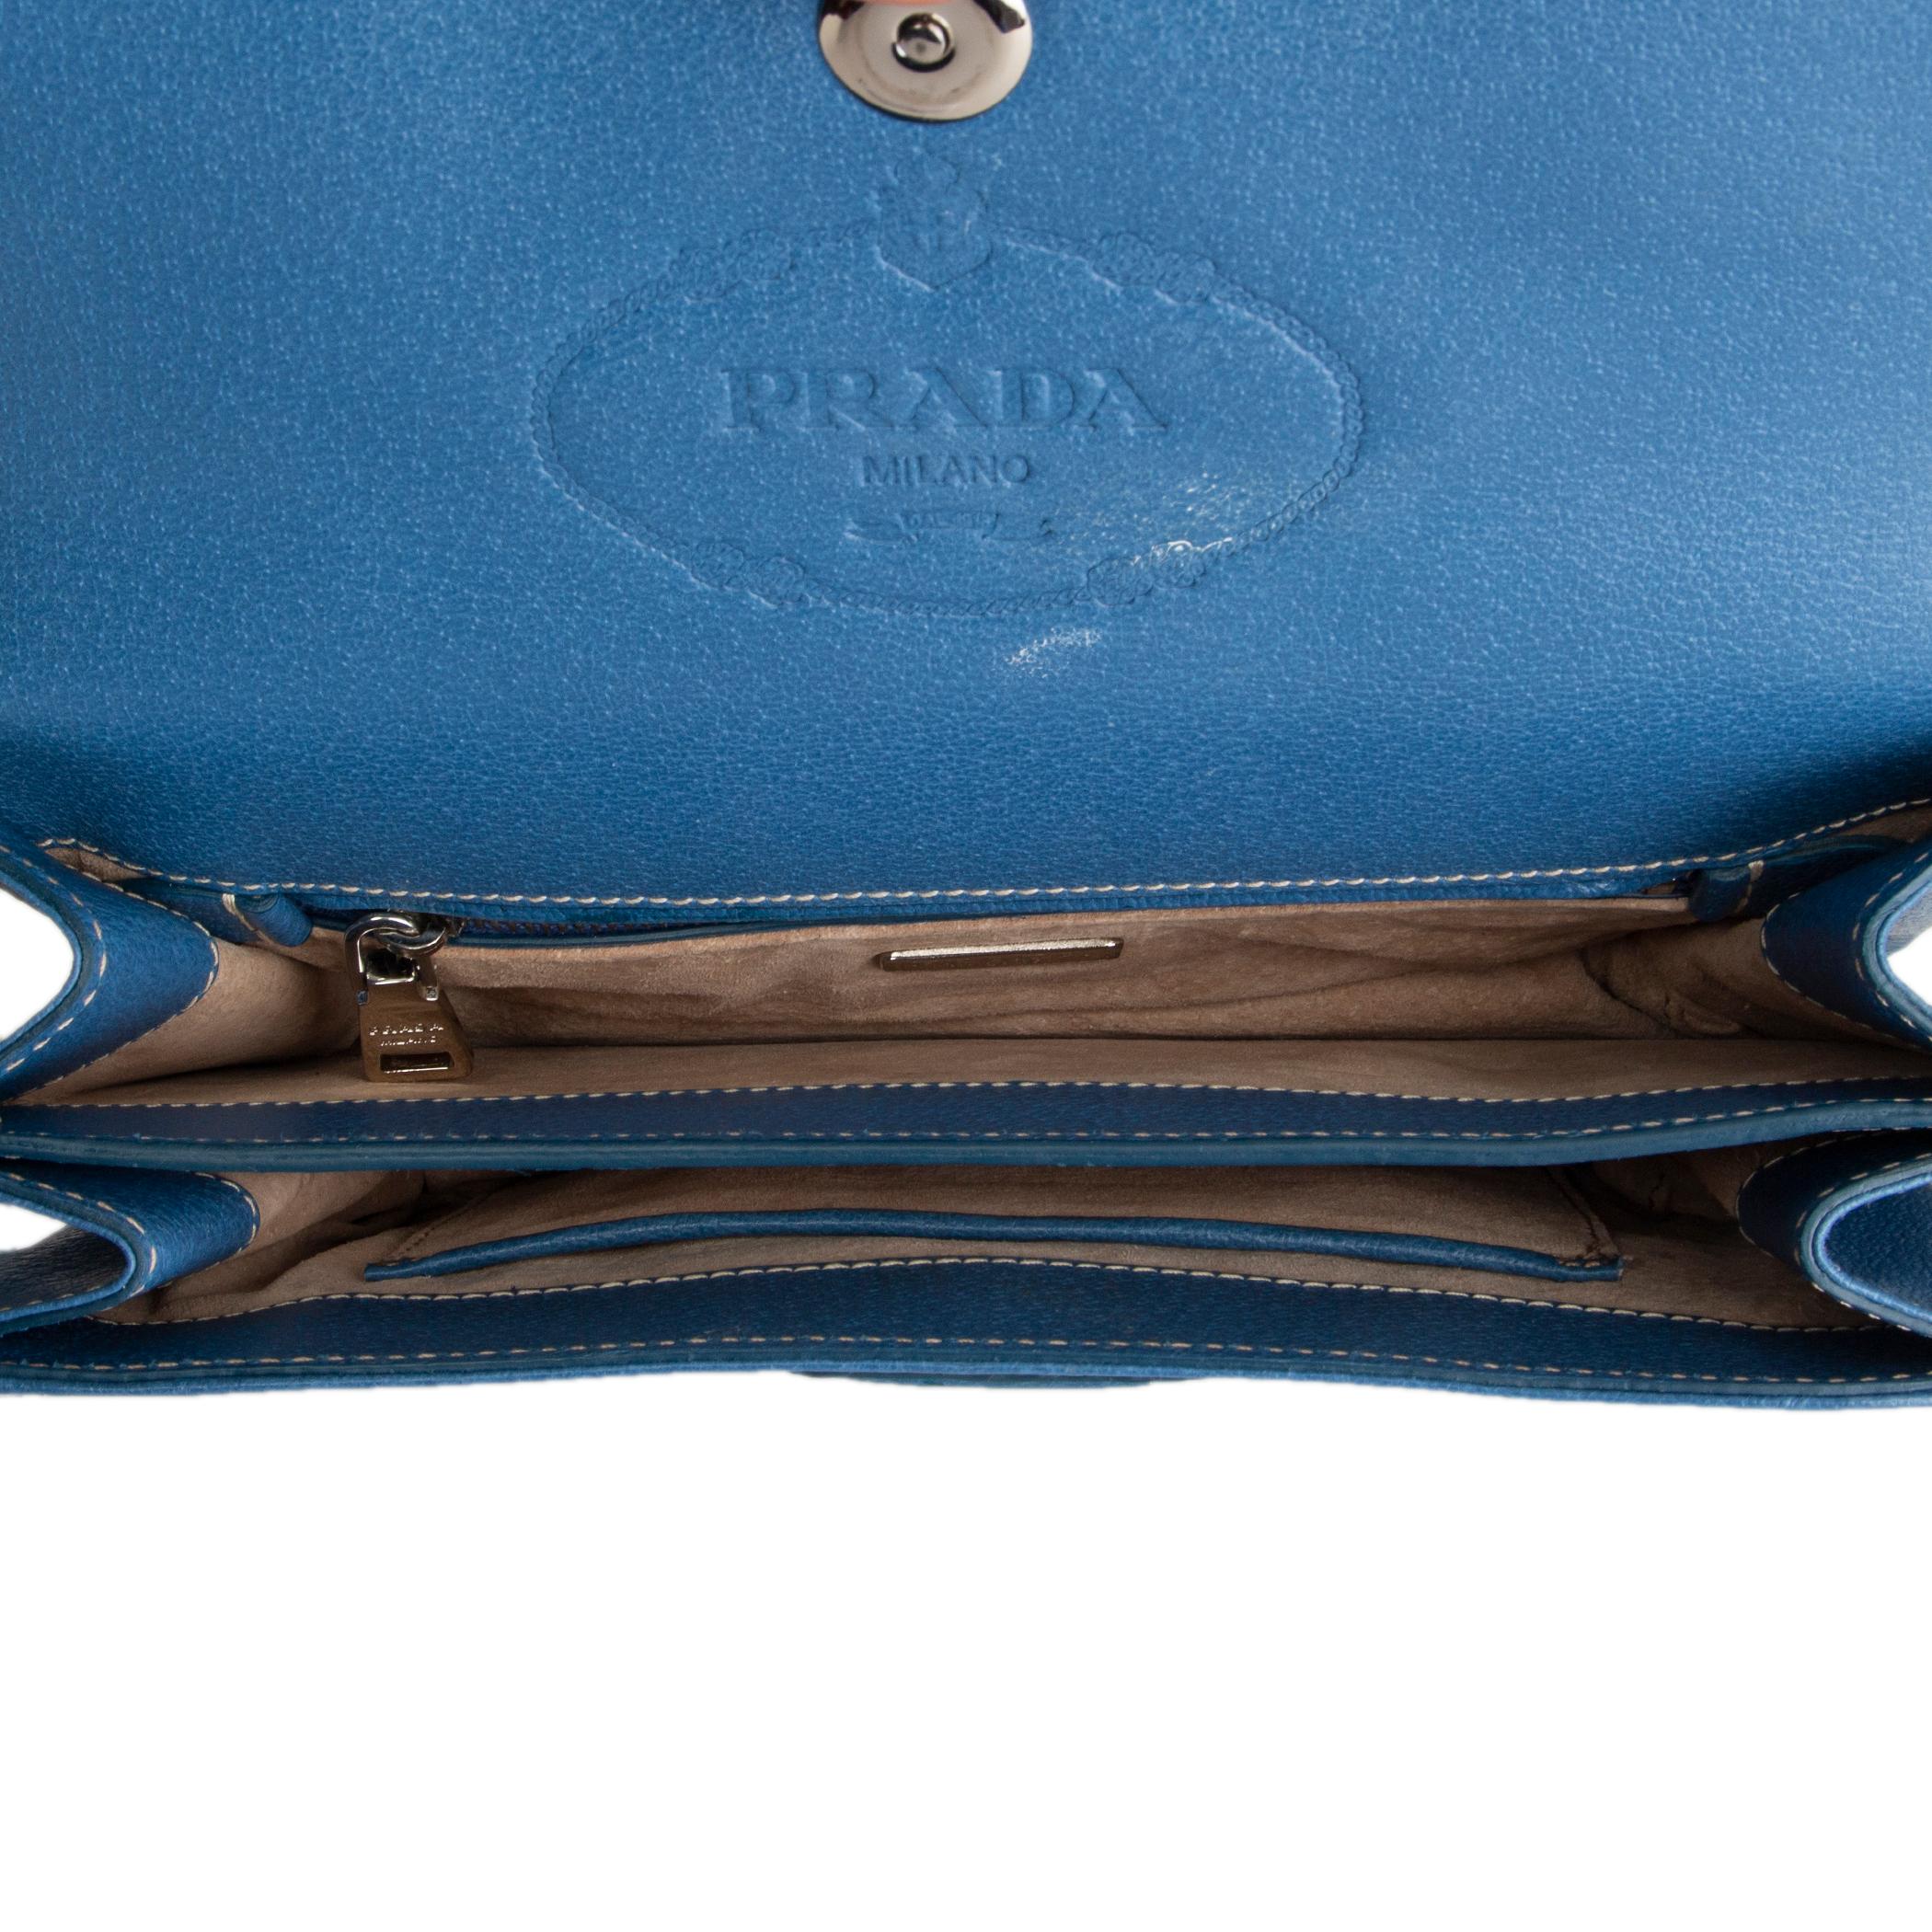 Women's PRADA blue Cinghale leather Crossbody Shoulder Bag